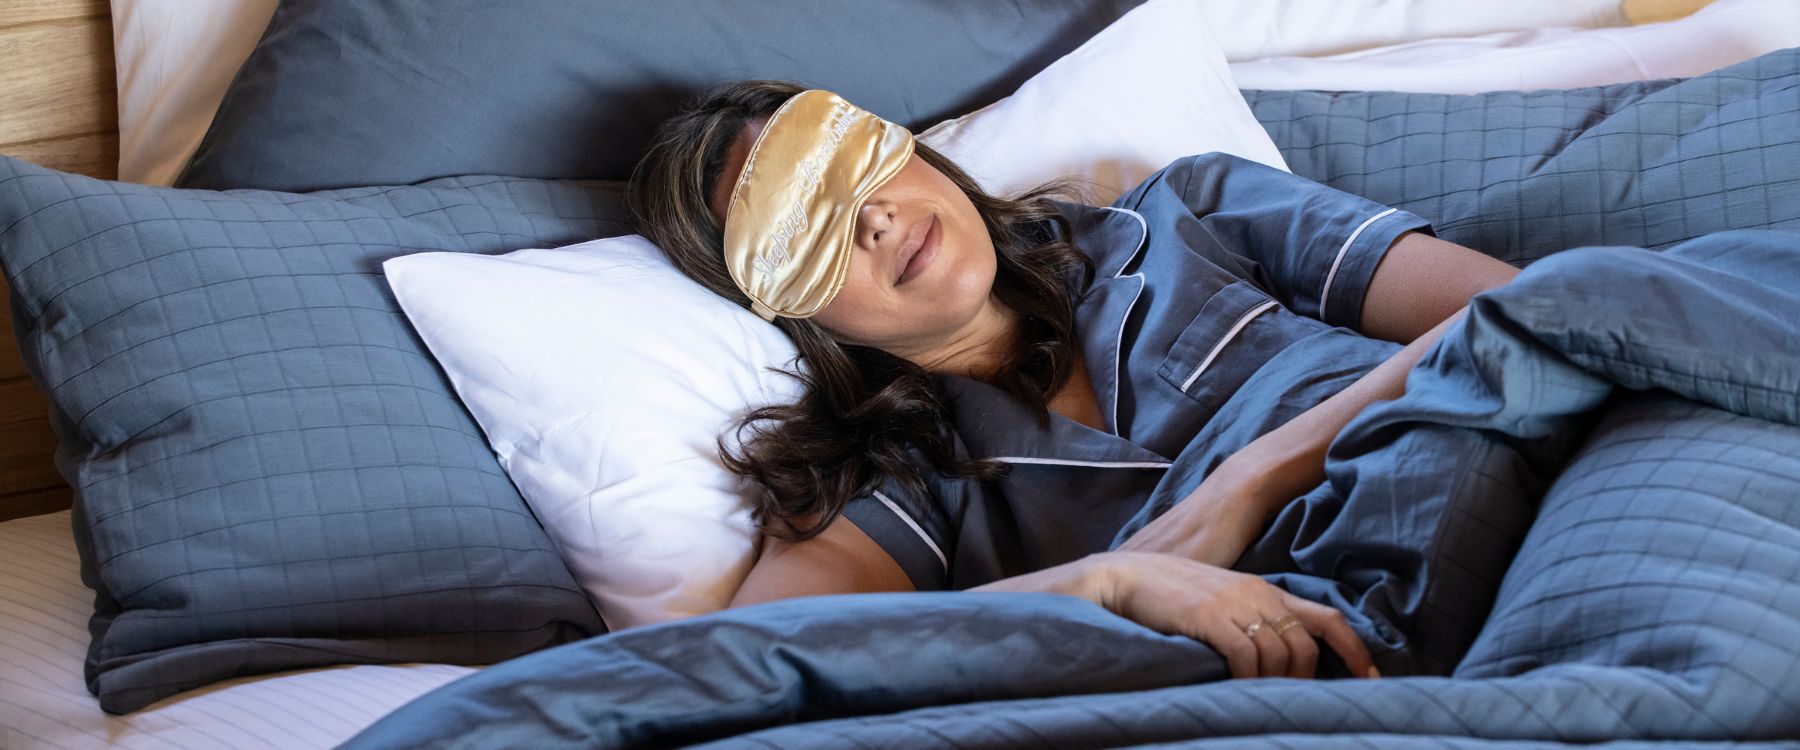 Bedroom dilemma: Should you go commando to sleep?